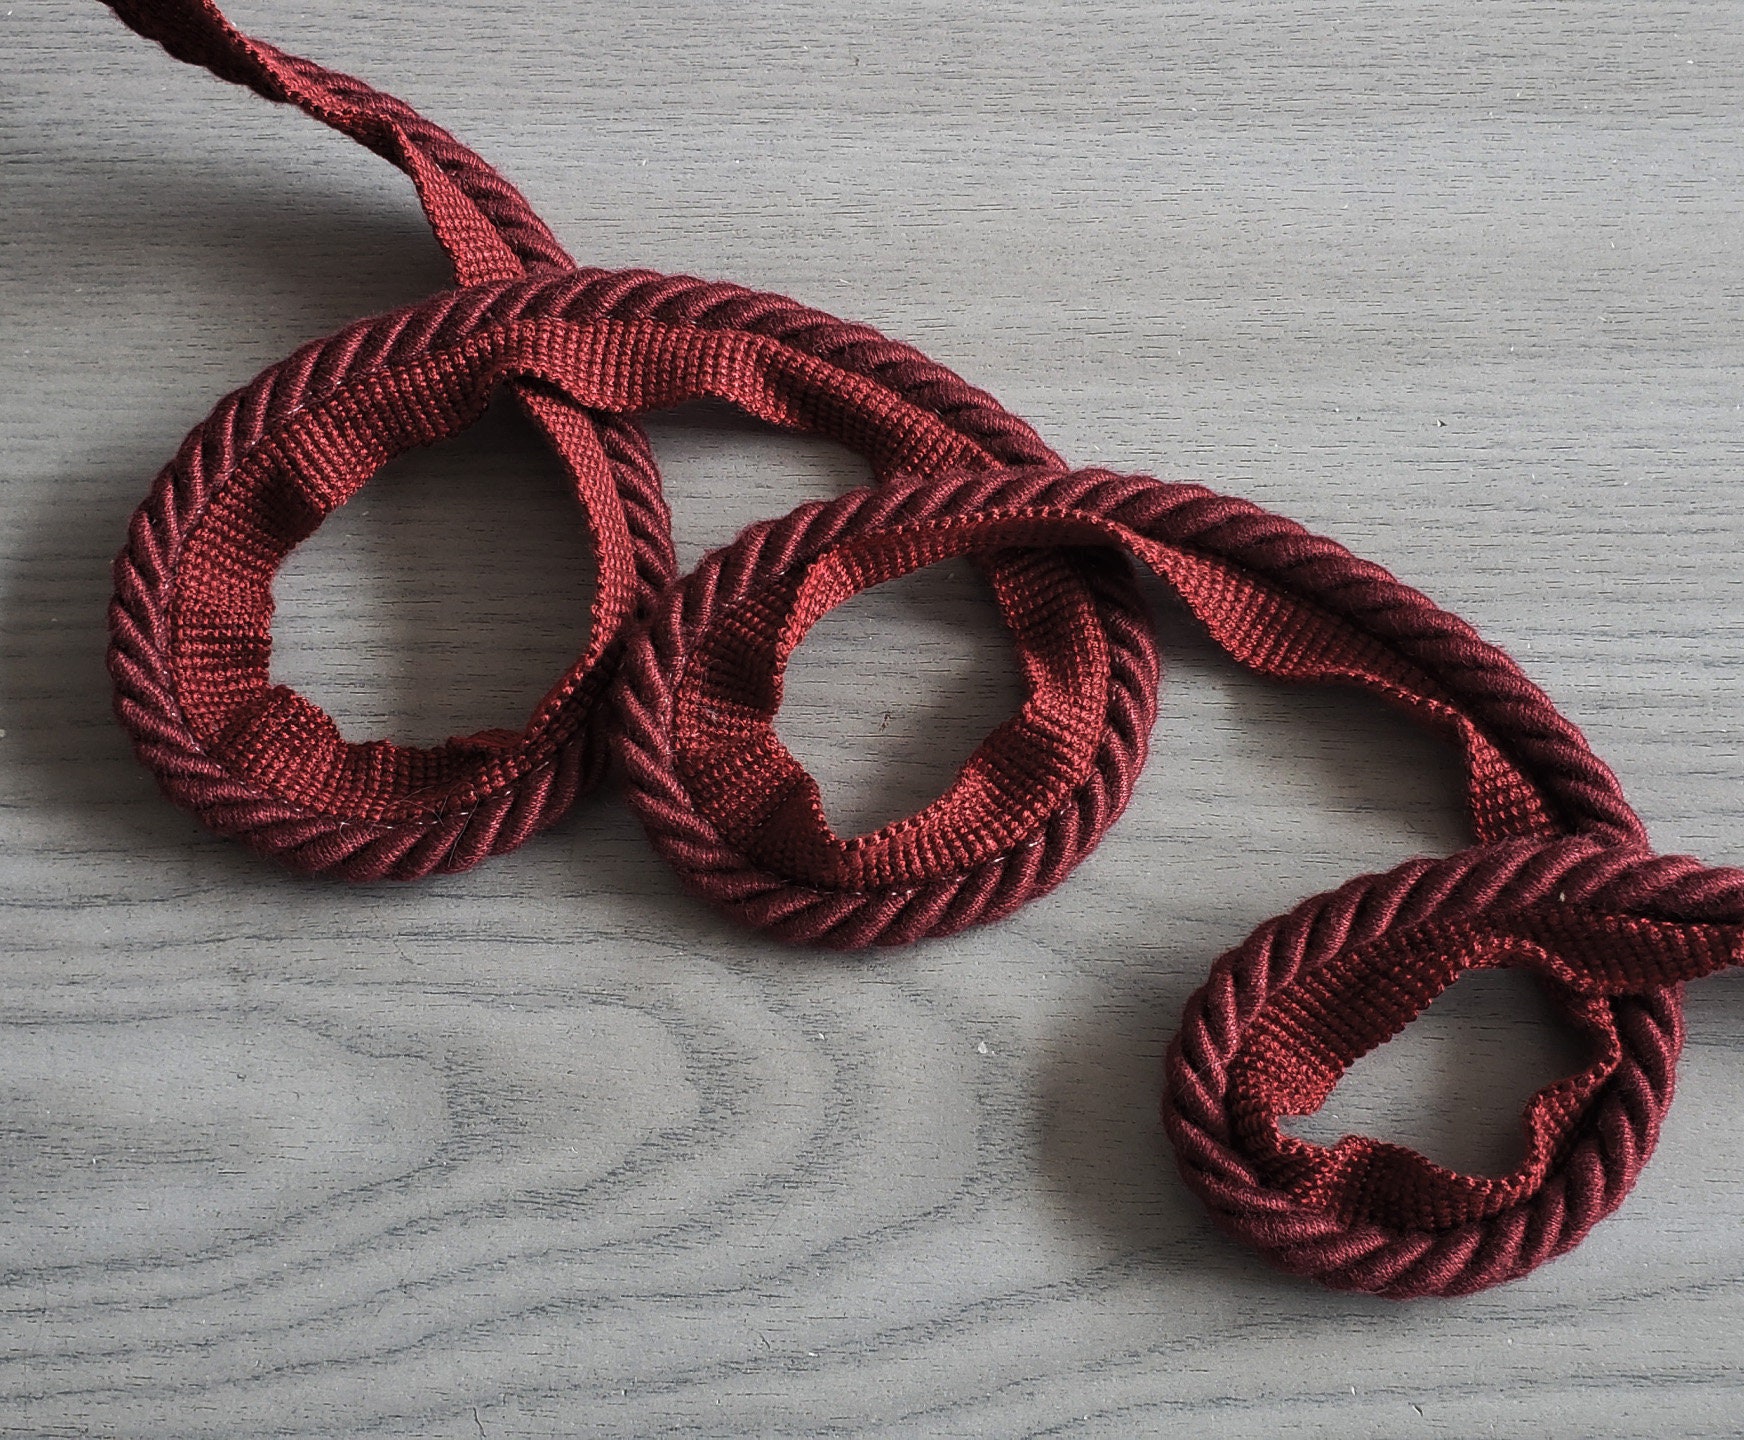 Decorative Braided Metallic Rope Cord String Christmas Presents